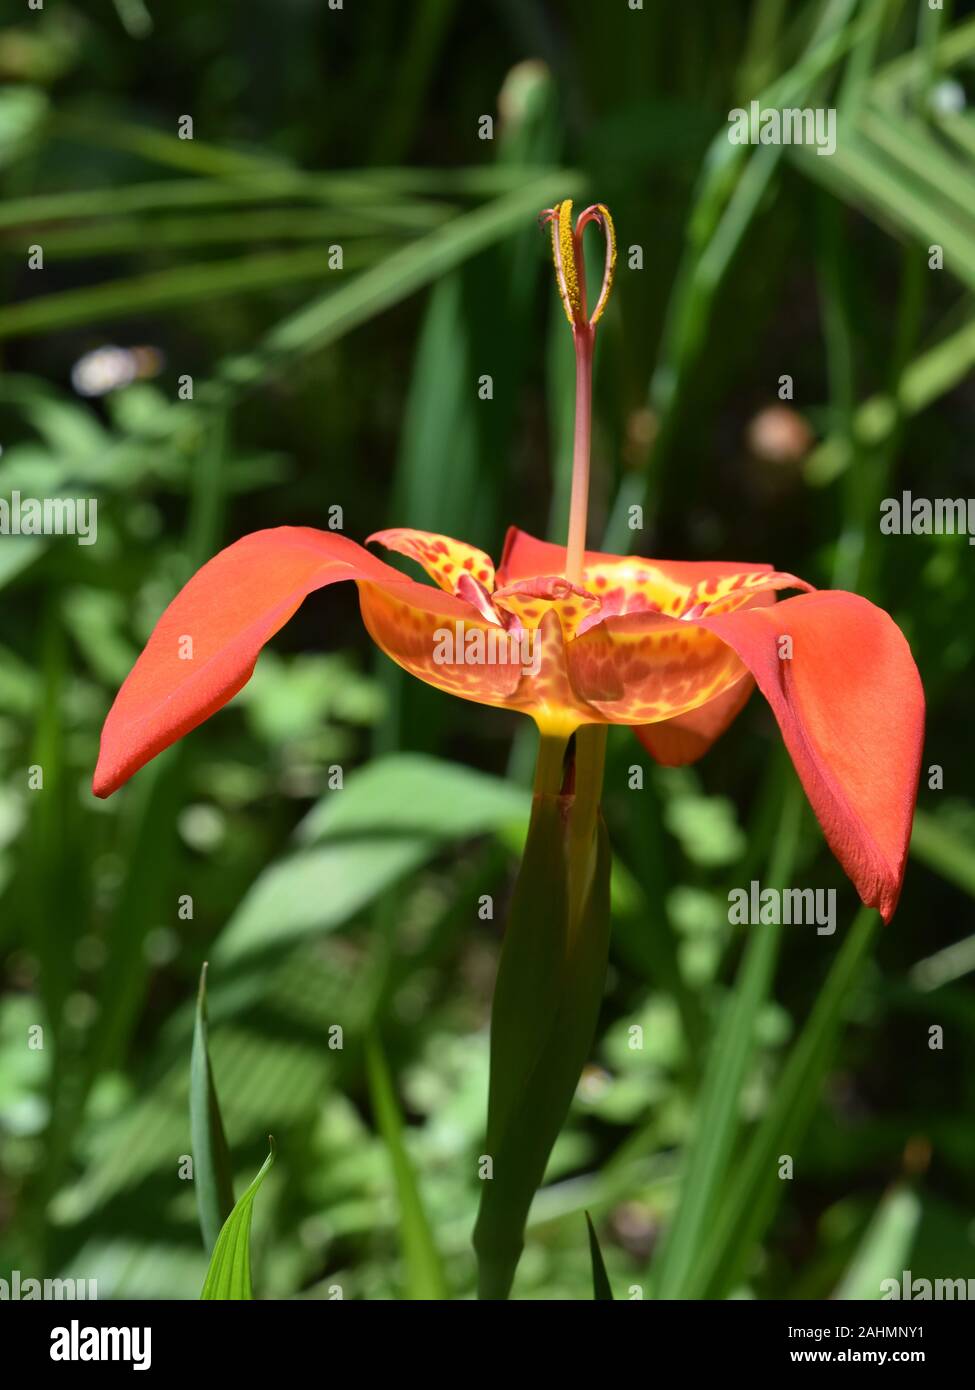 Orange spotted jockey's cap lily Tigridia pavonia flower Stock Photo